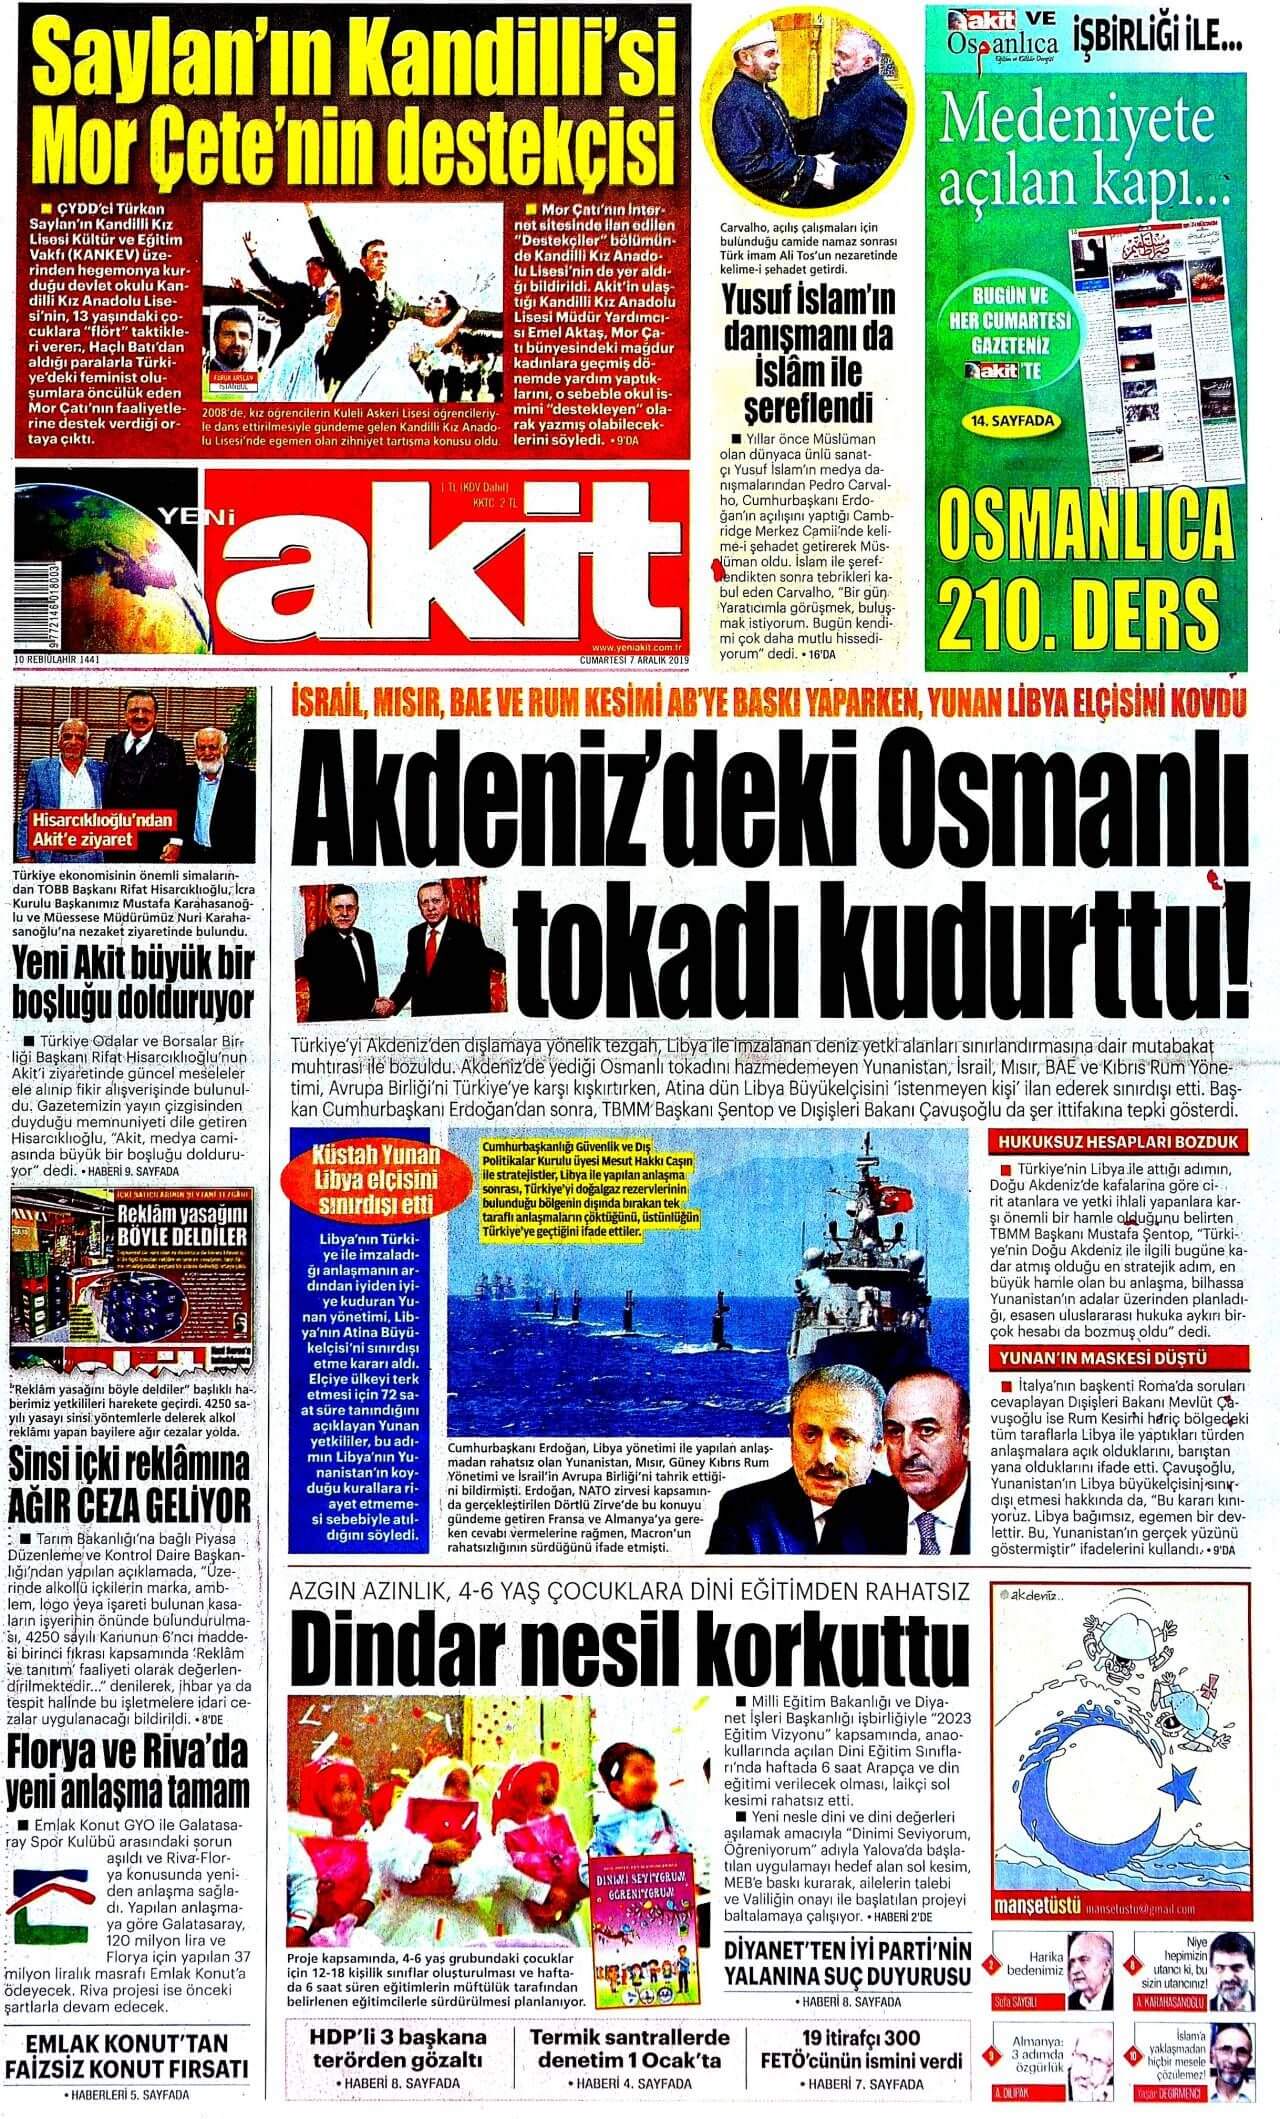 Turkish Newspapers 8 Yeni Akit